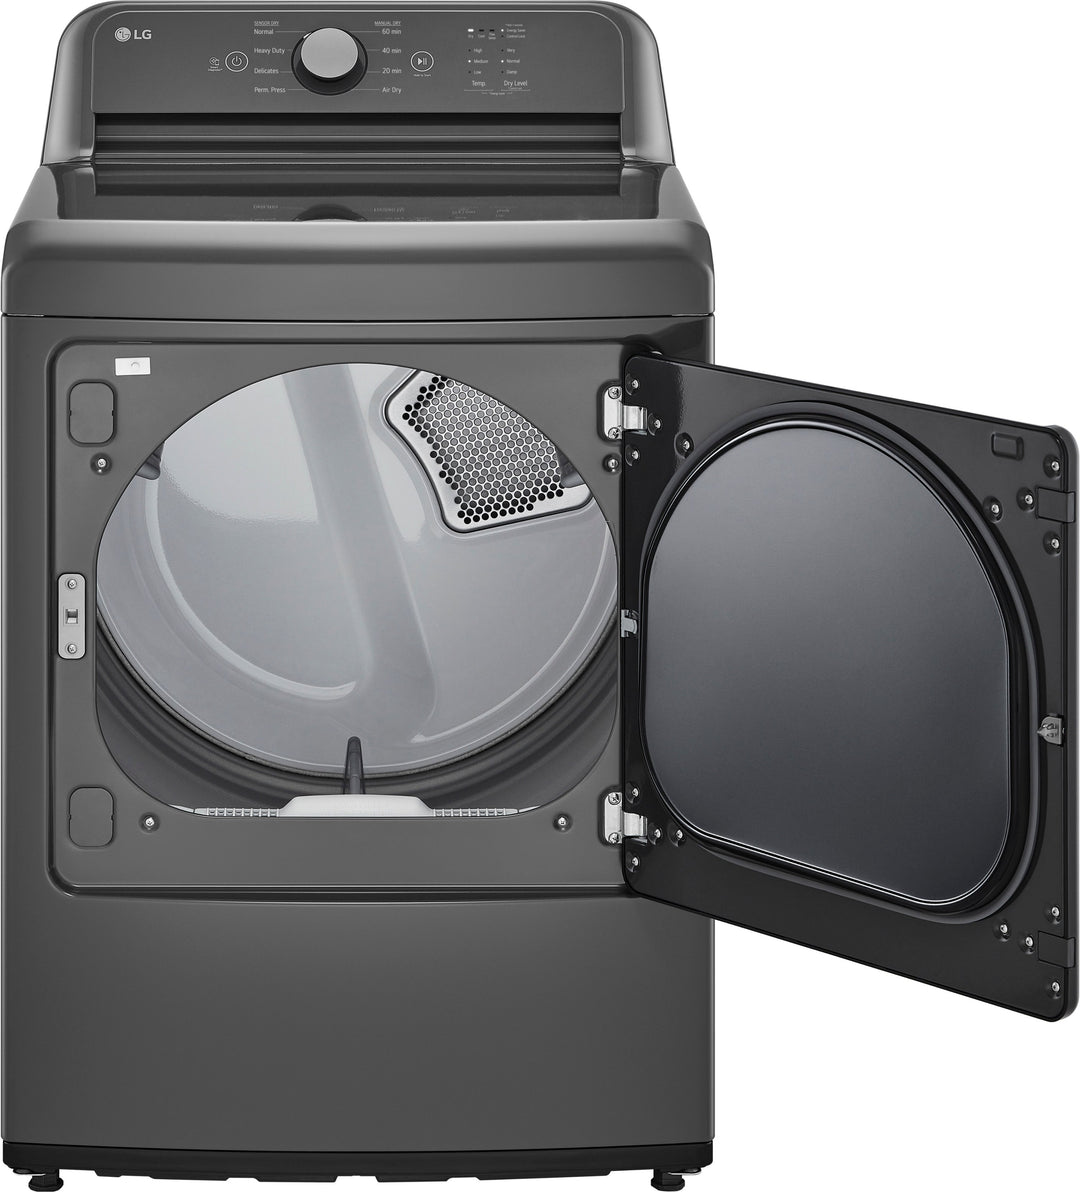 LG - 7.3 Cu. Ft. Electric Dryer with Sensor Dry - Monochrome Grey_1